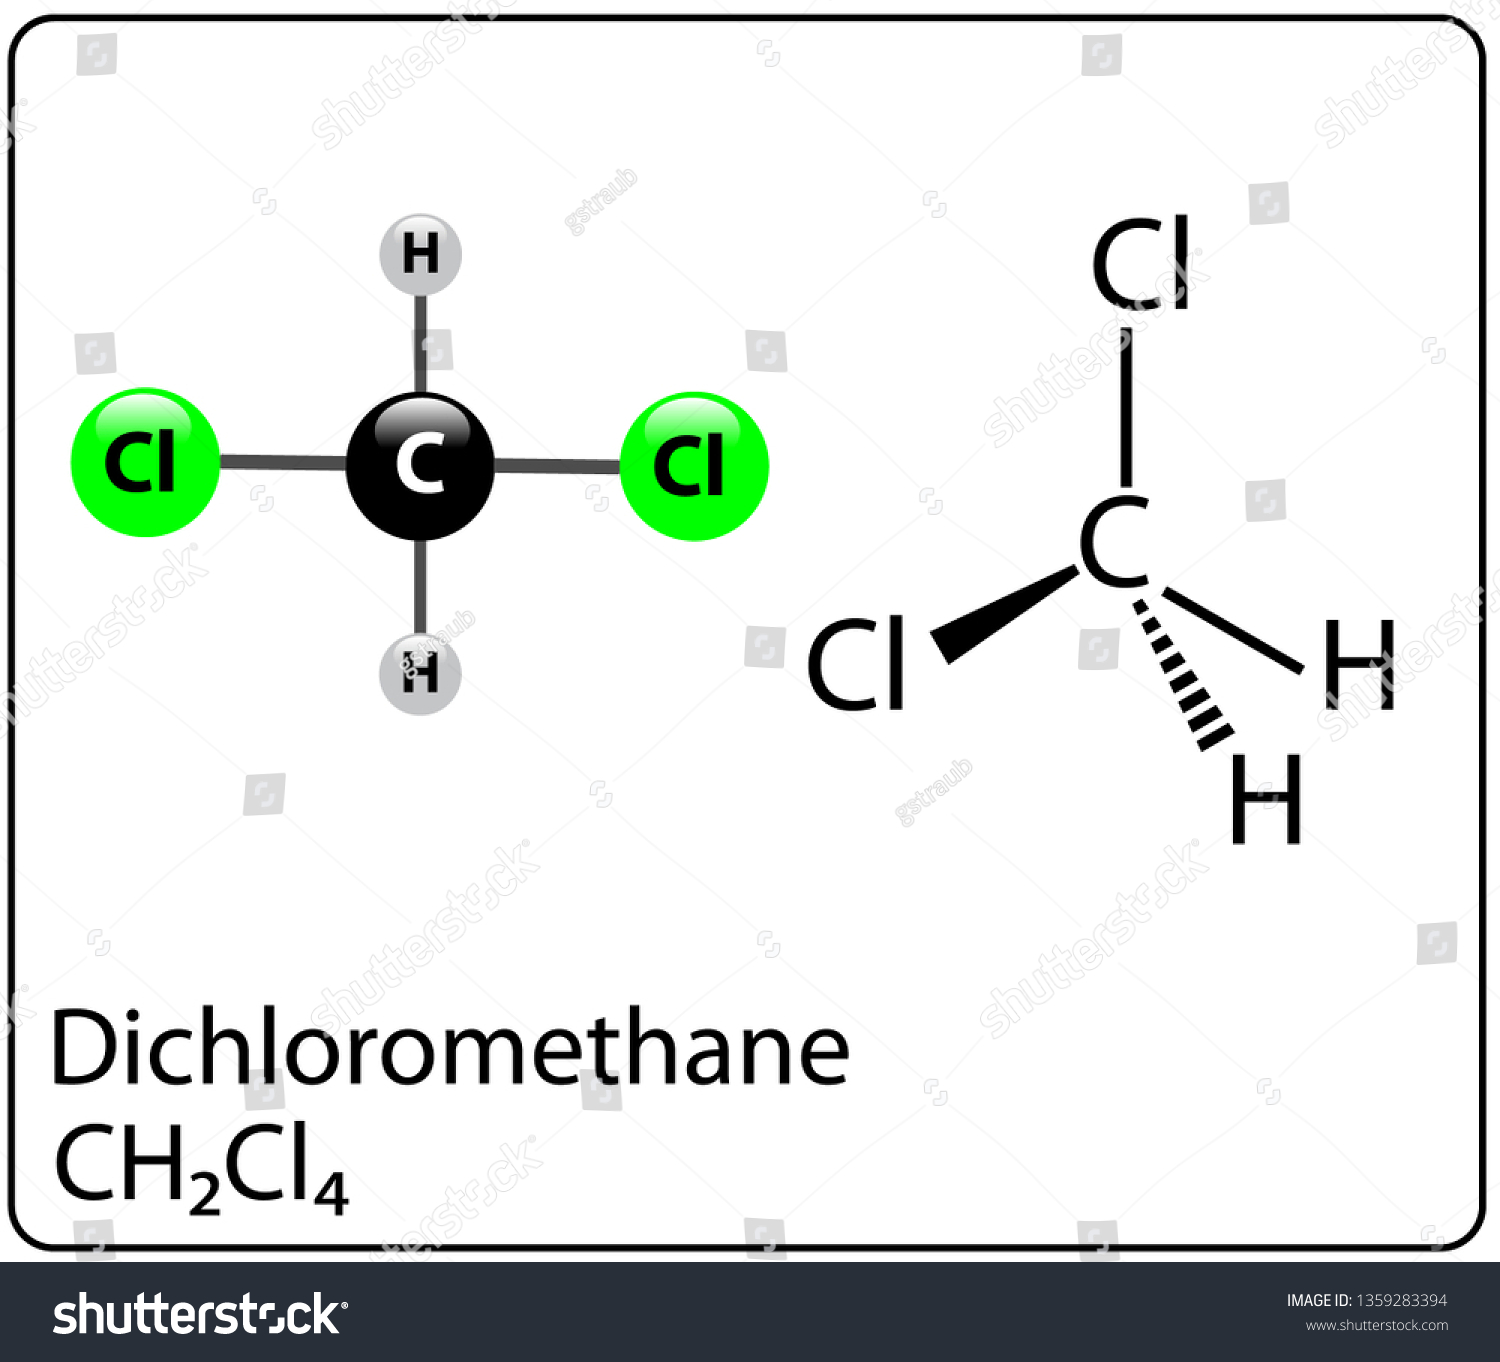 Dichloromethane Molecule Structure Stock Vector (Royalty Free ...